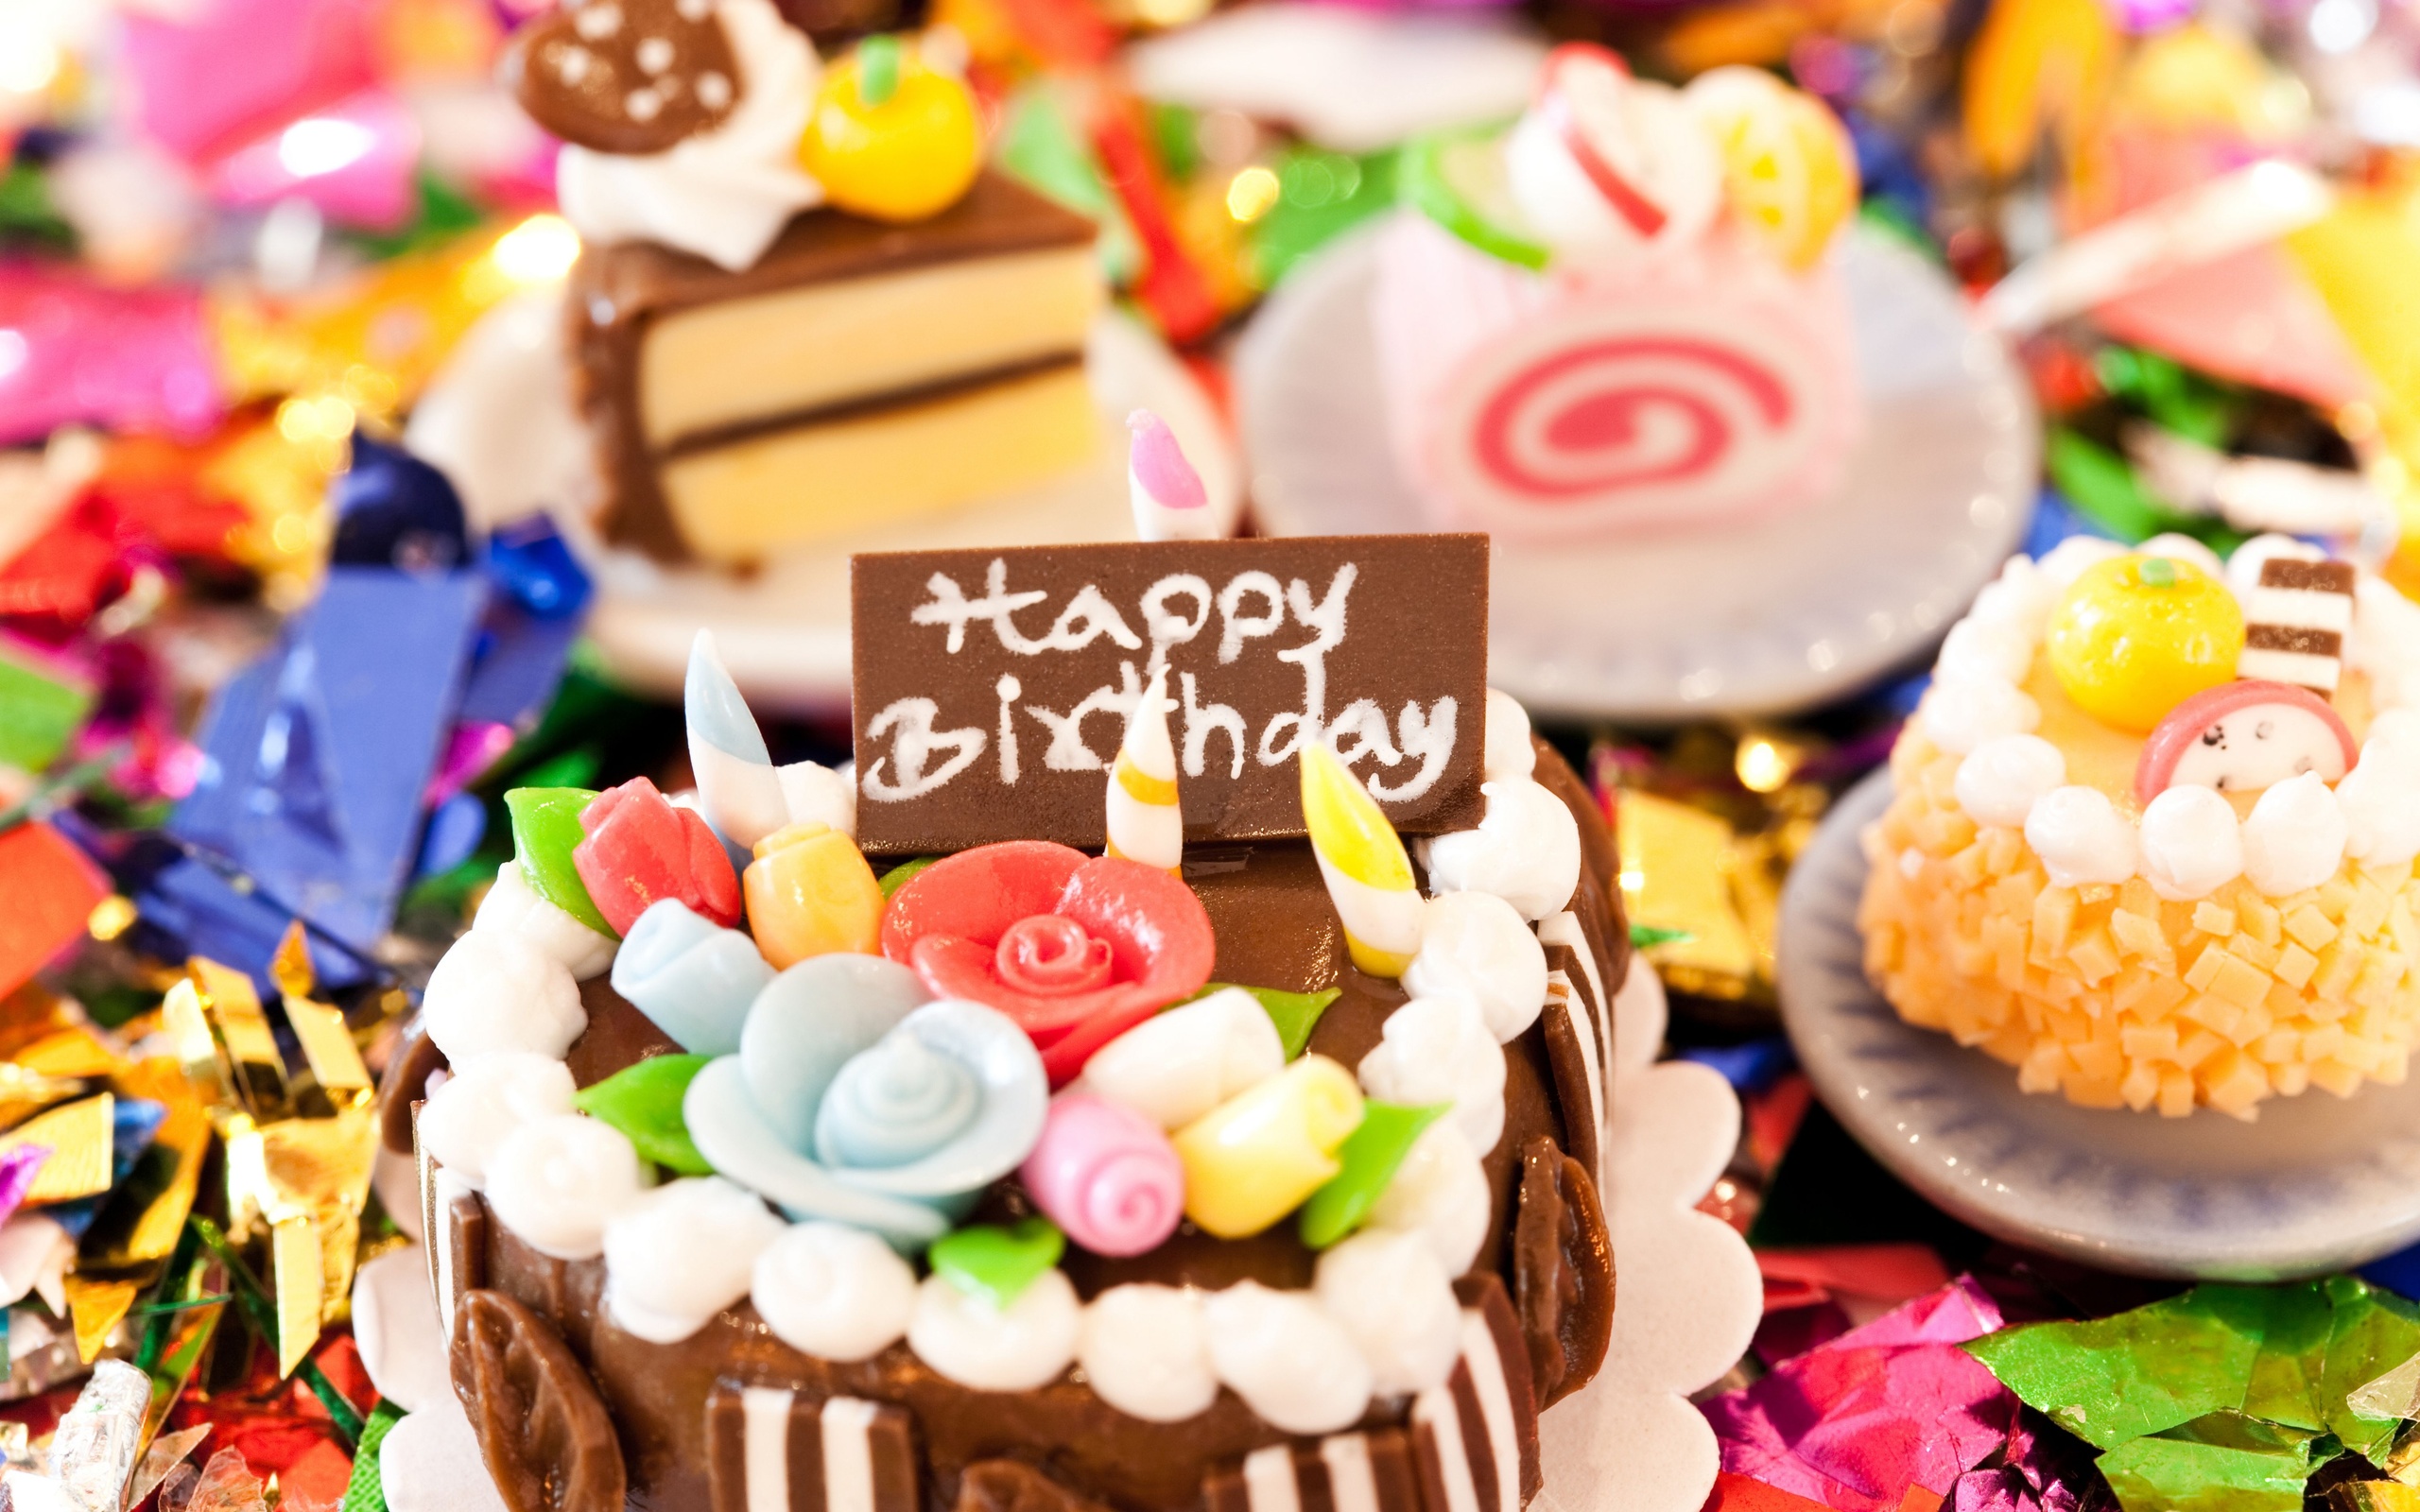 birthday, colorful, happy birthday, holiday, dessert, sugar, sweets